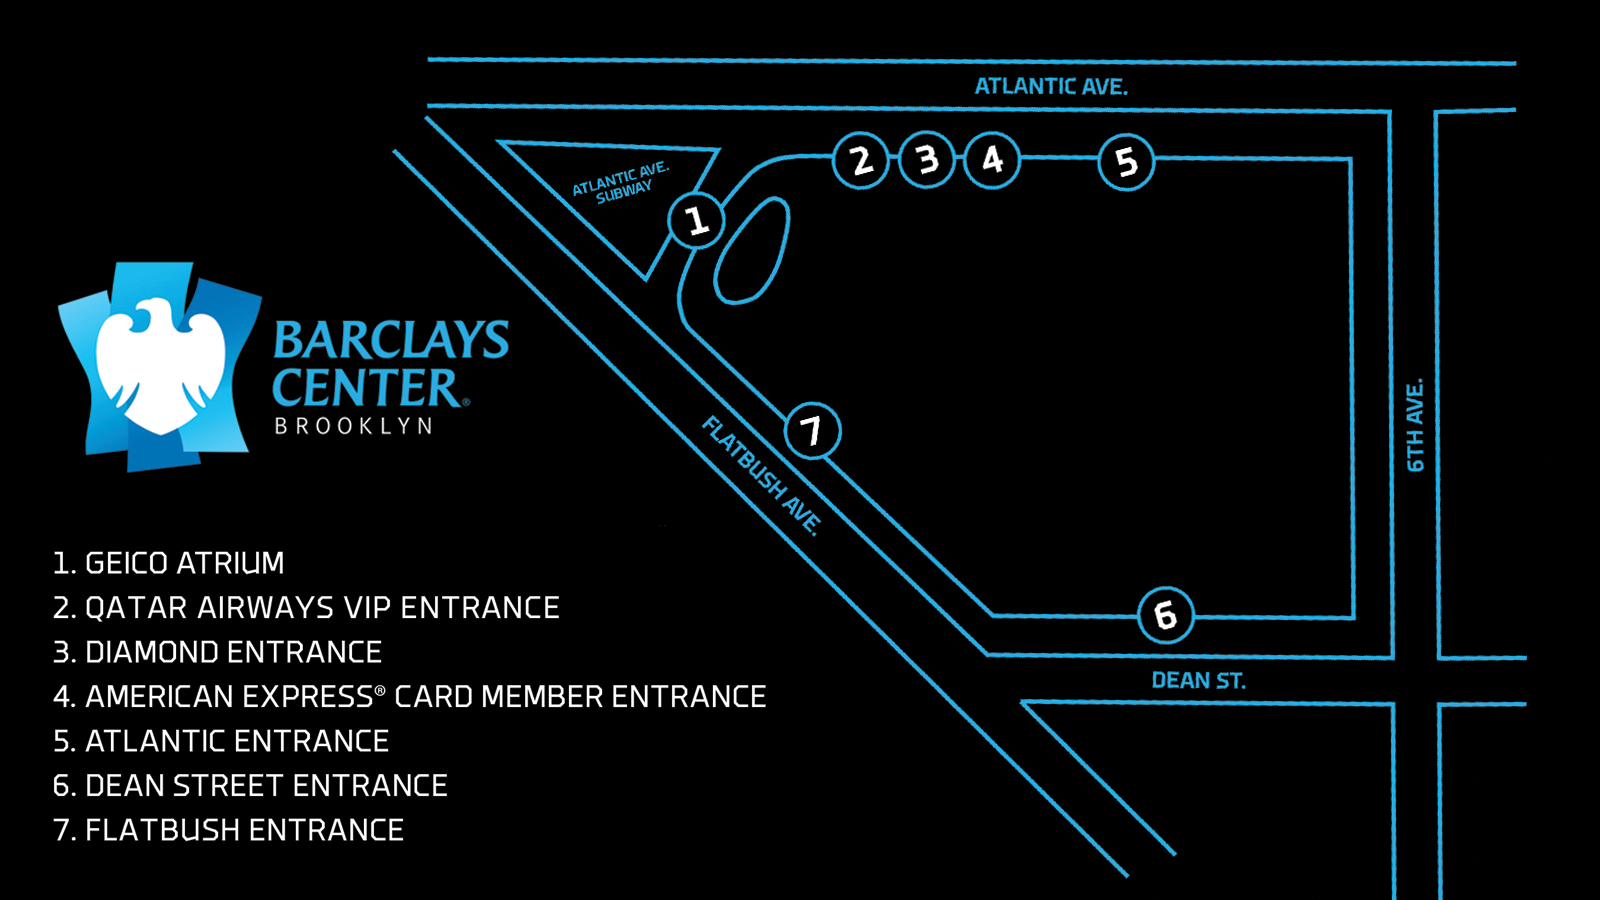 Barclays Center Entrance Map